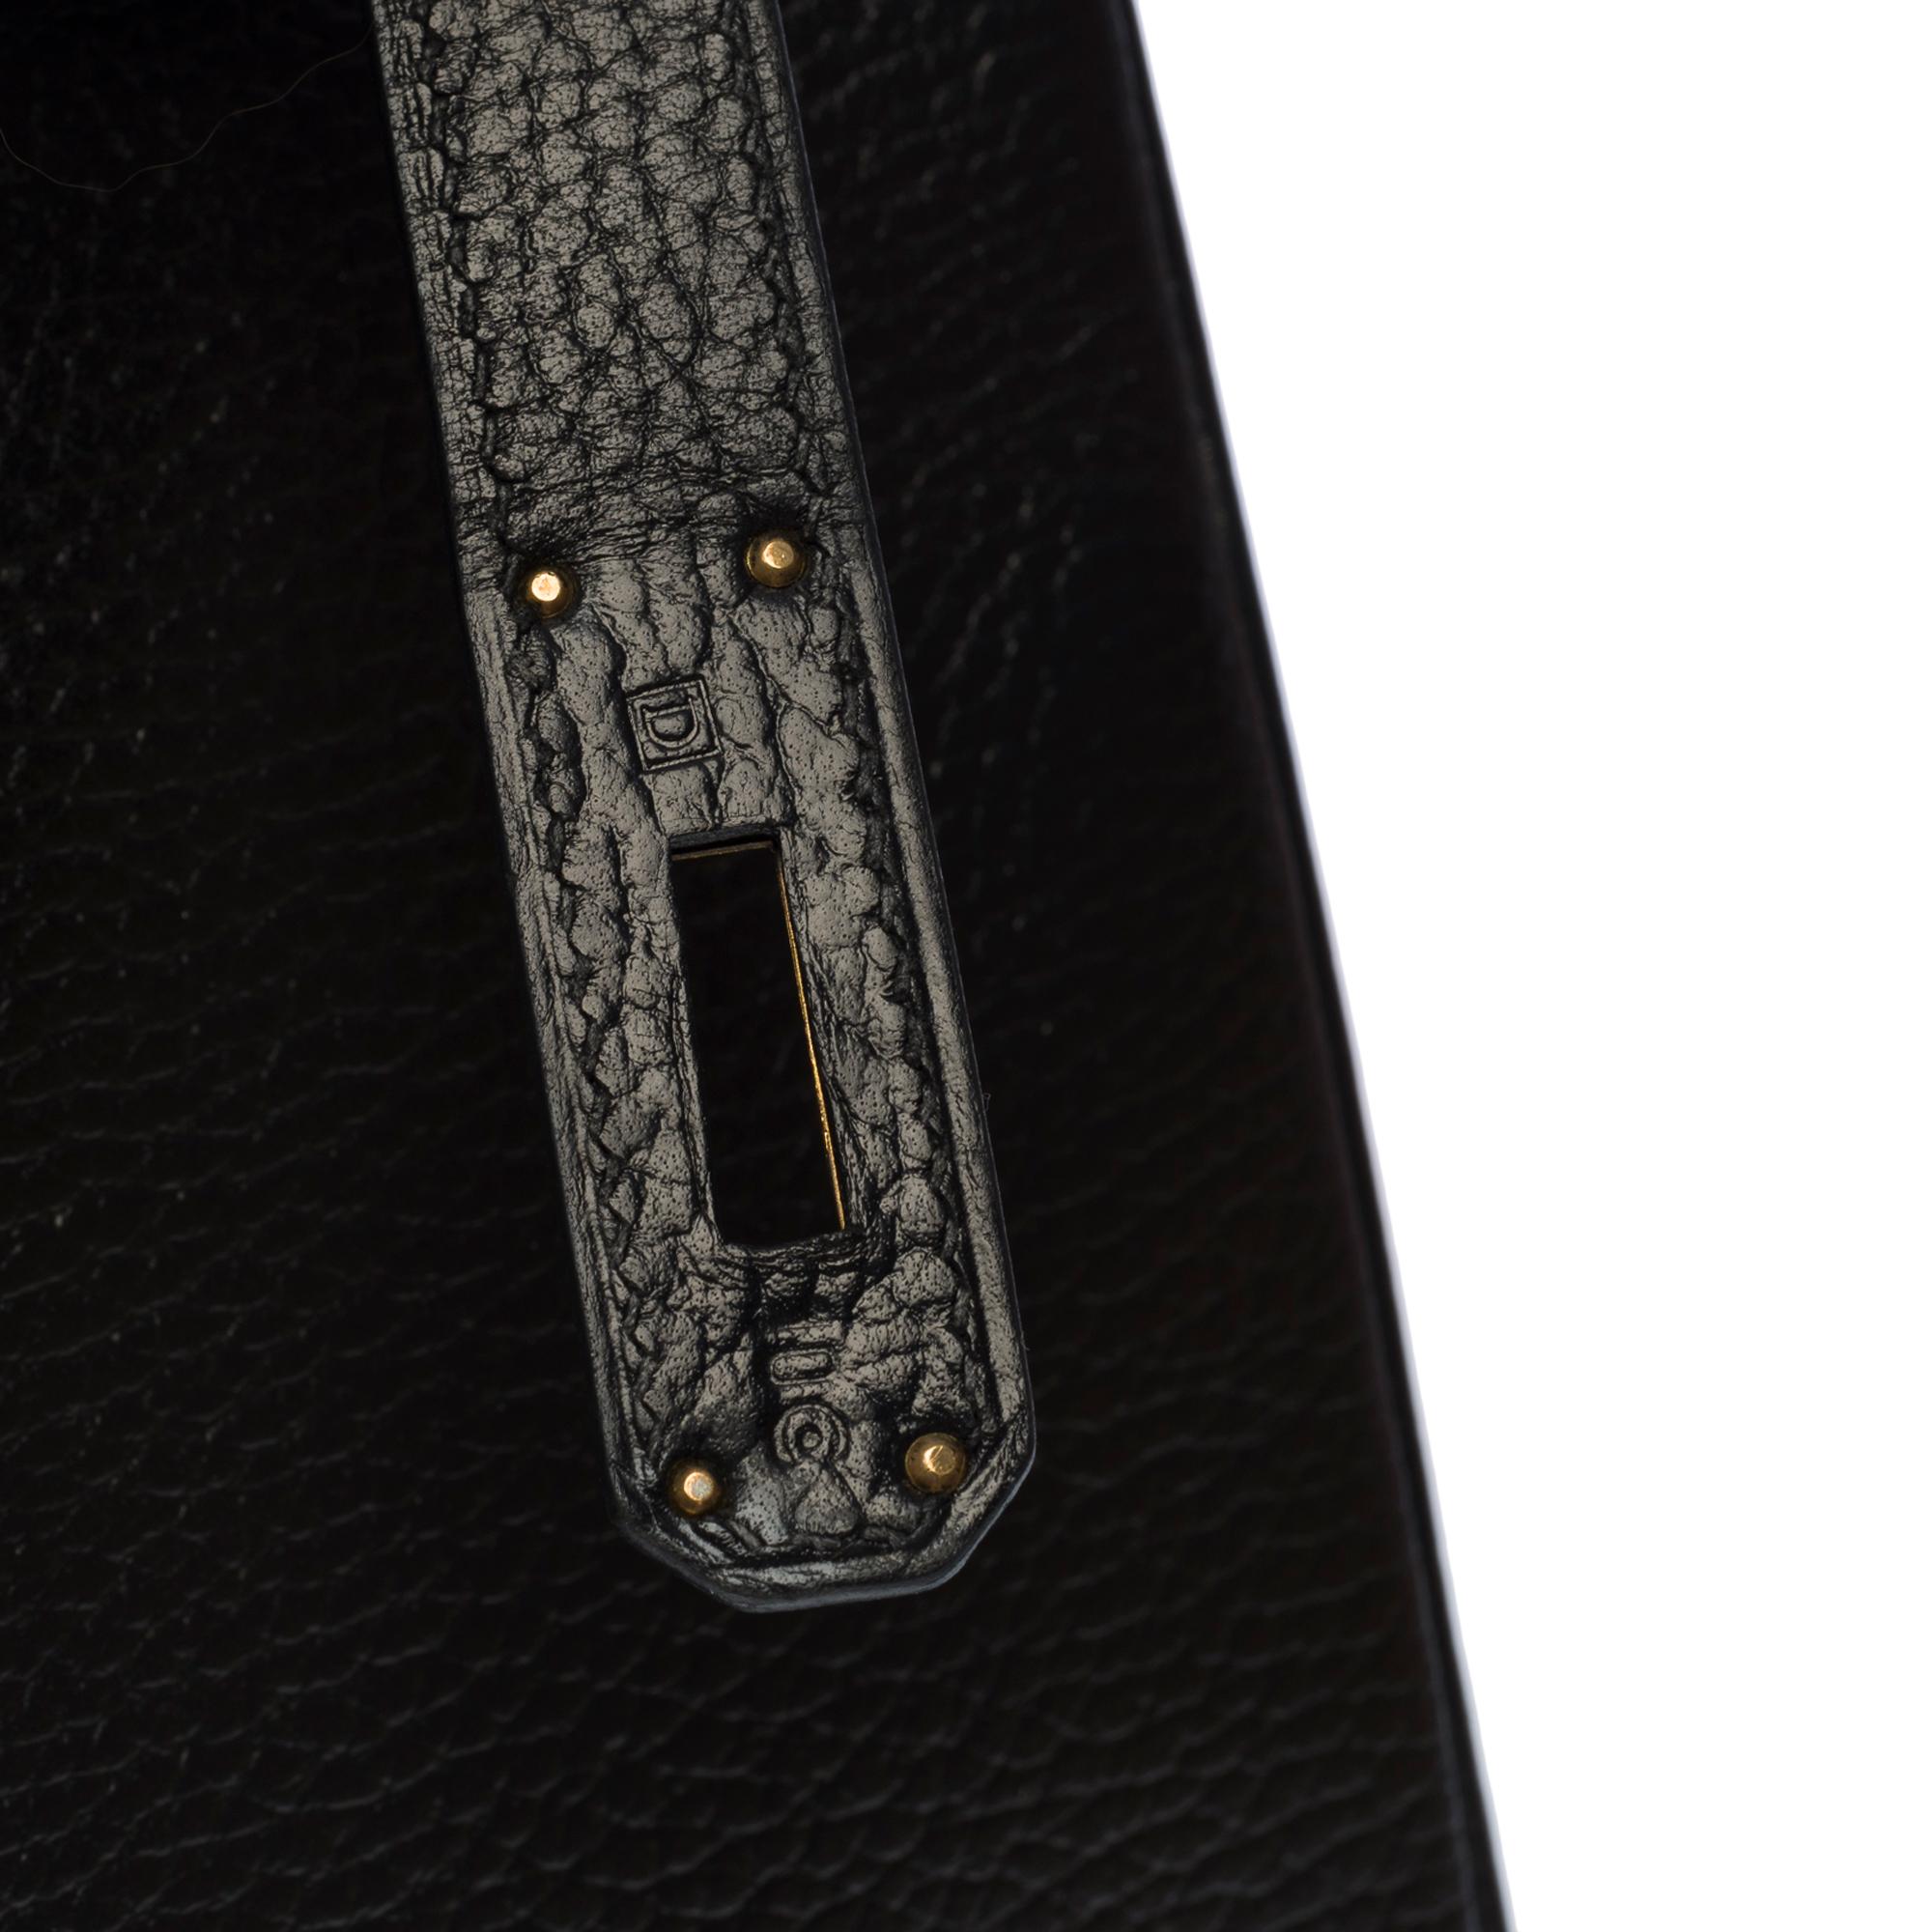 Amazing Hermès Birkin 35 handbag in black Togo leather, GHW 2